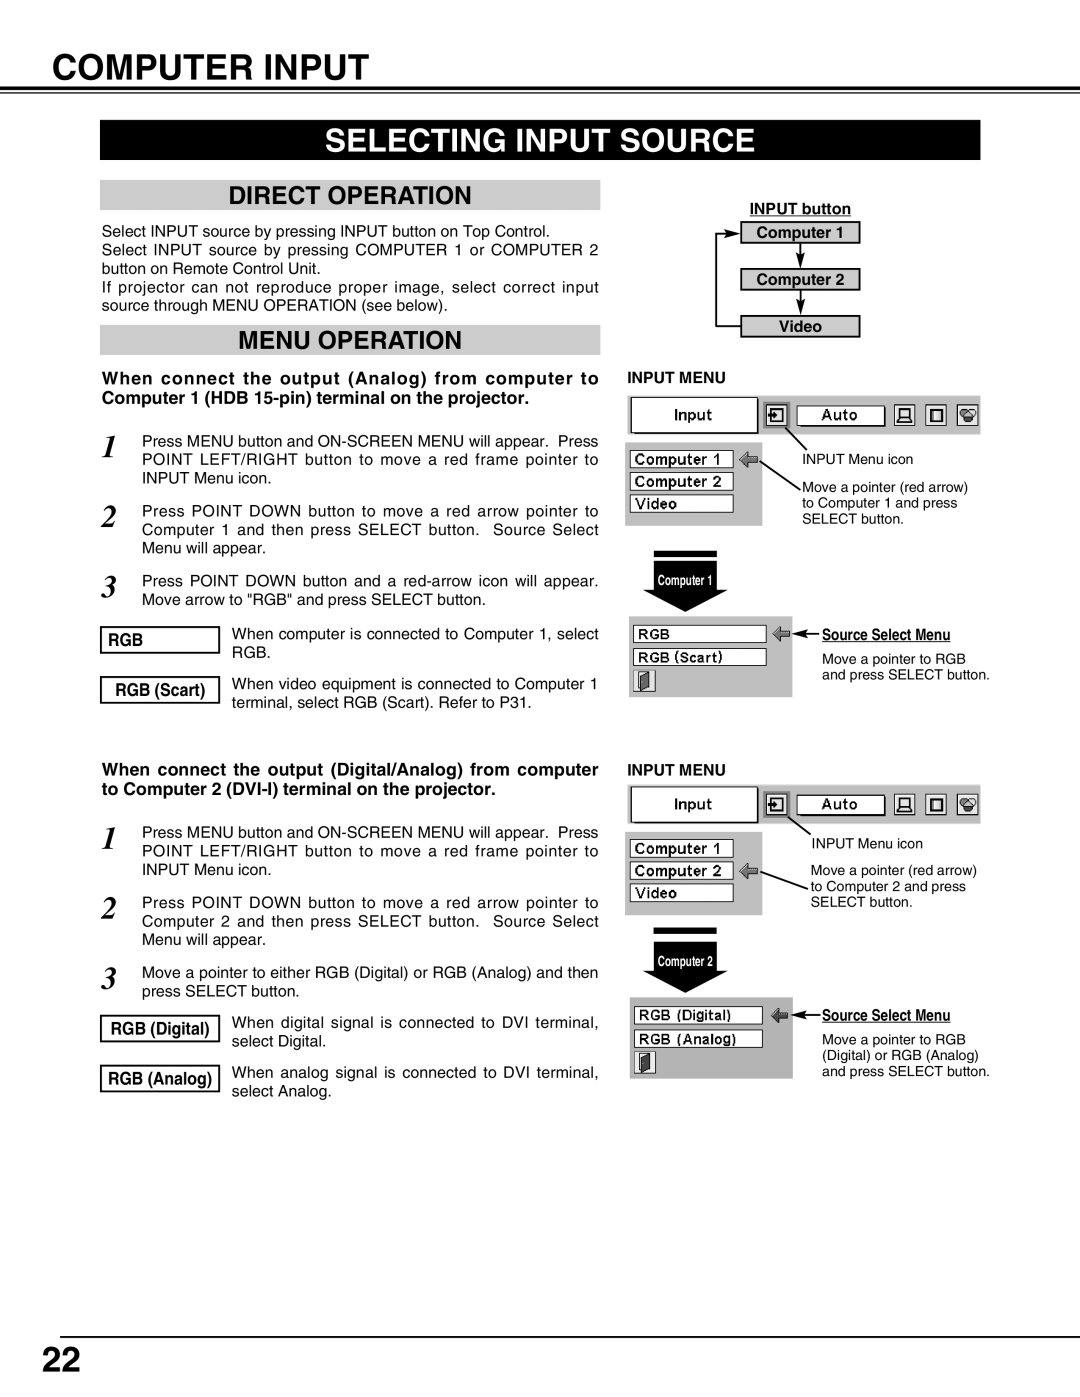 Christie Digital Systems 38-VIV207-01 Computer Input, Selecting Input Source, Direct Operation, Menu Operation, RGB Scart 